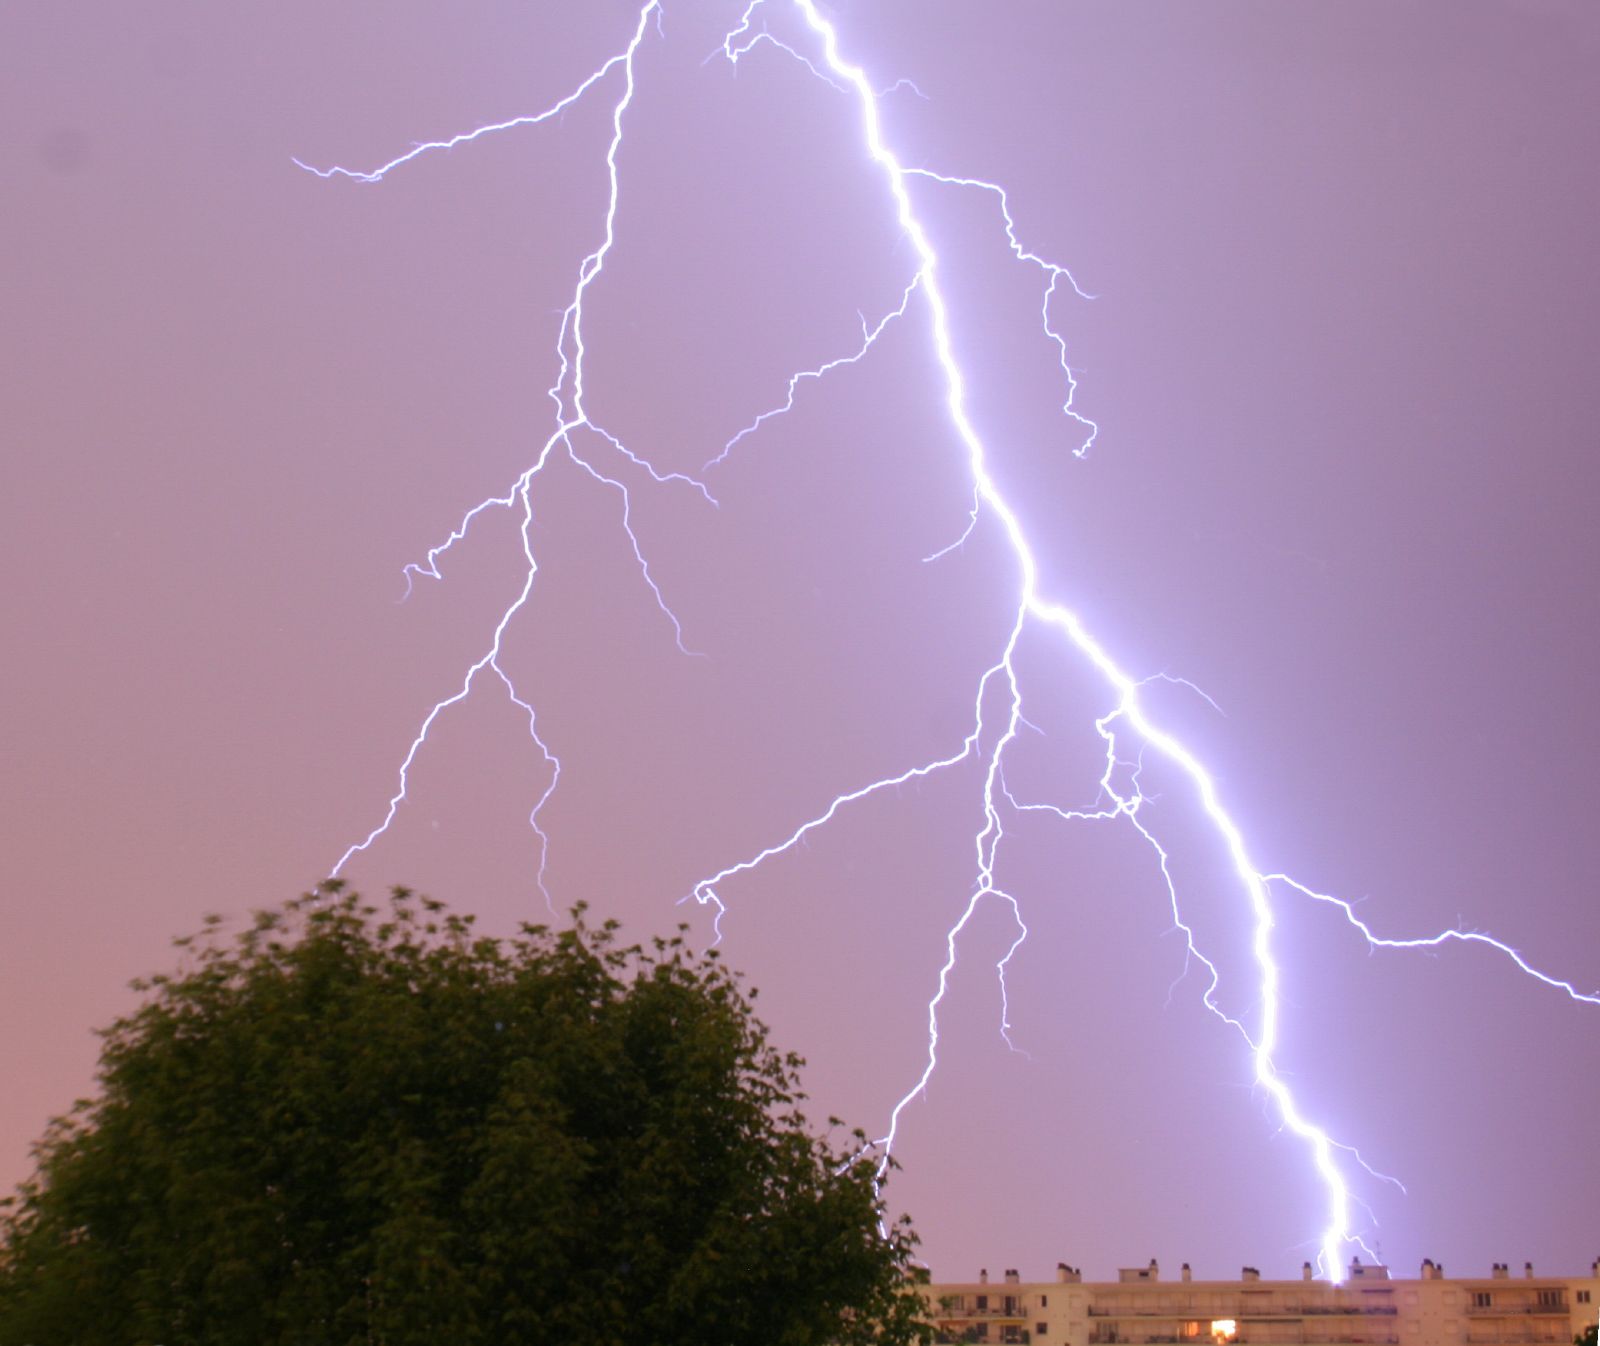 File:Axel Rouvin - CG lightning strike (by).jpg - Wikimedia Commons